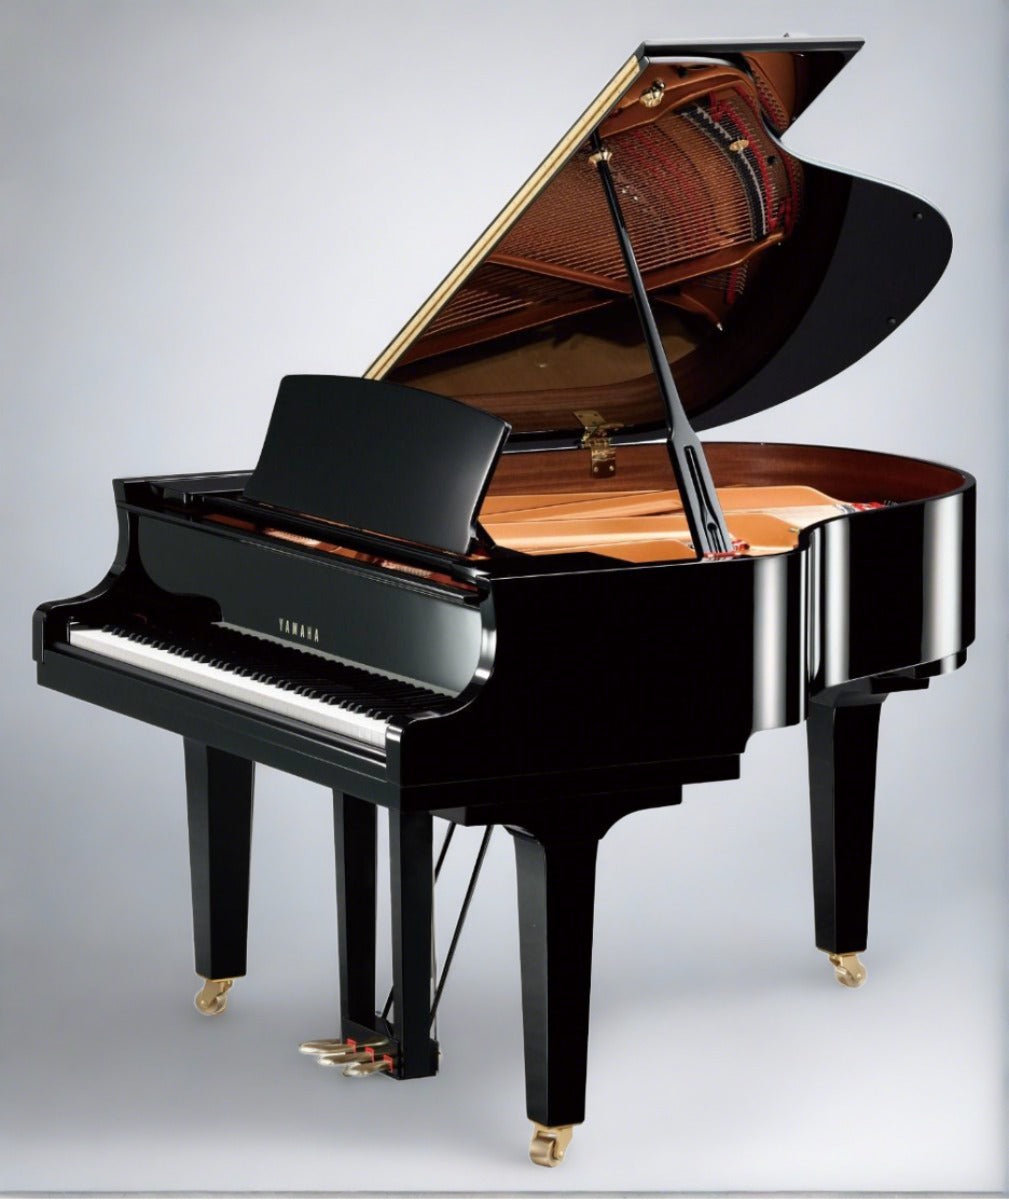 Yamaha C1X 5'3" Grand Piano In Polished Ebony